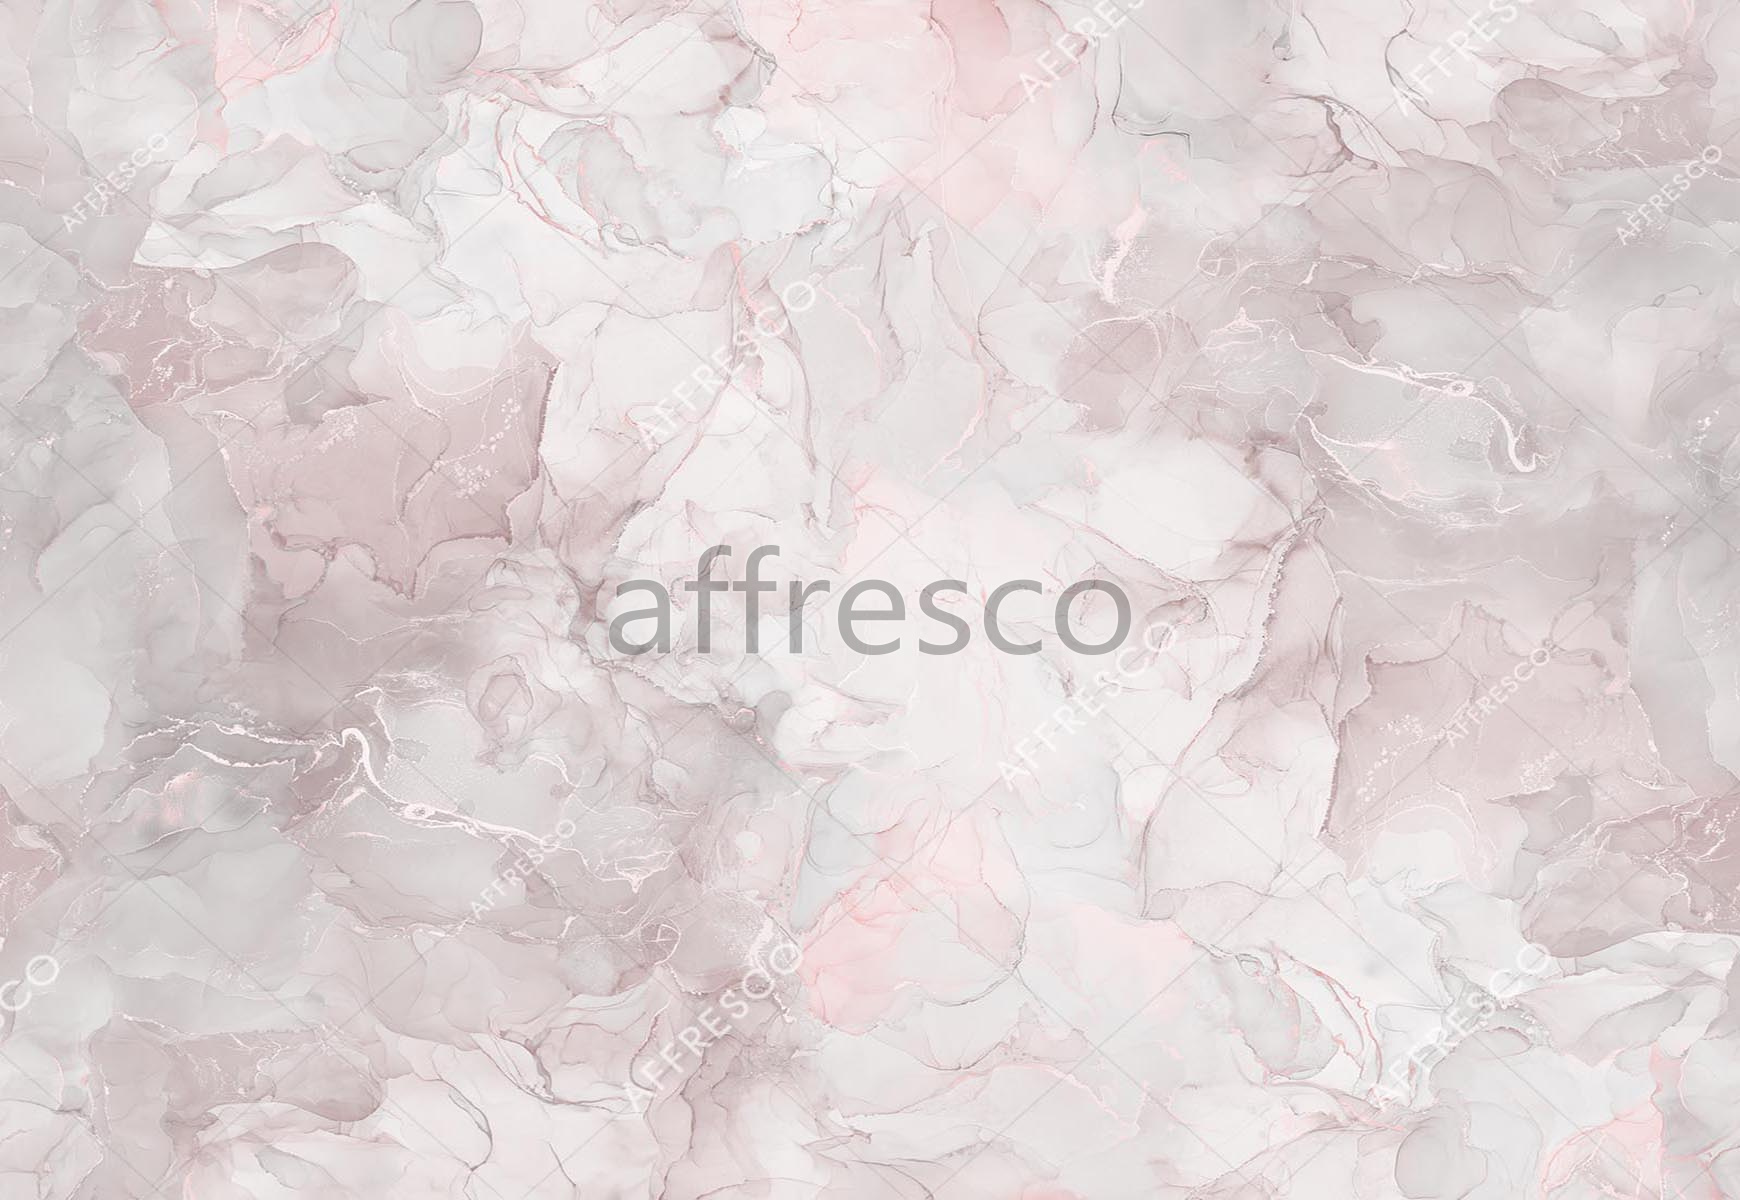 ID139112 | Fluid | Pastel stains | Affresco Factory